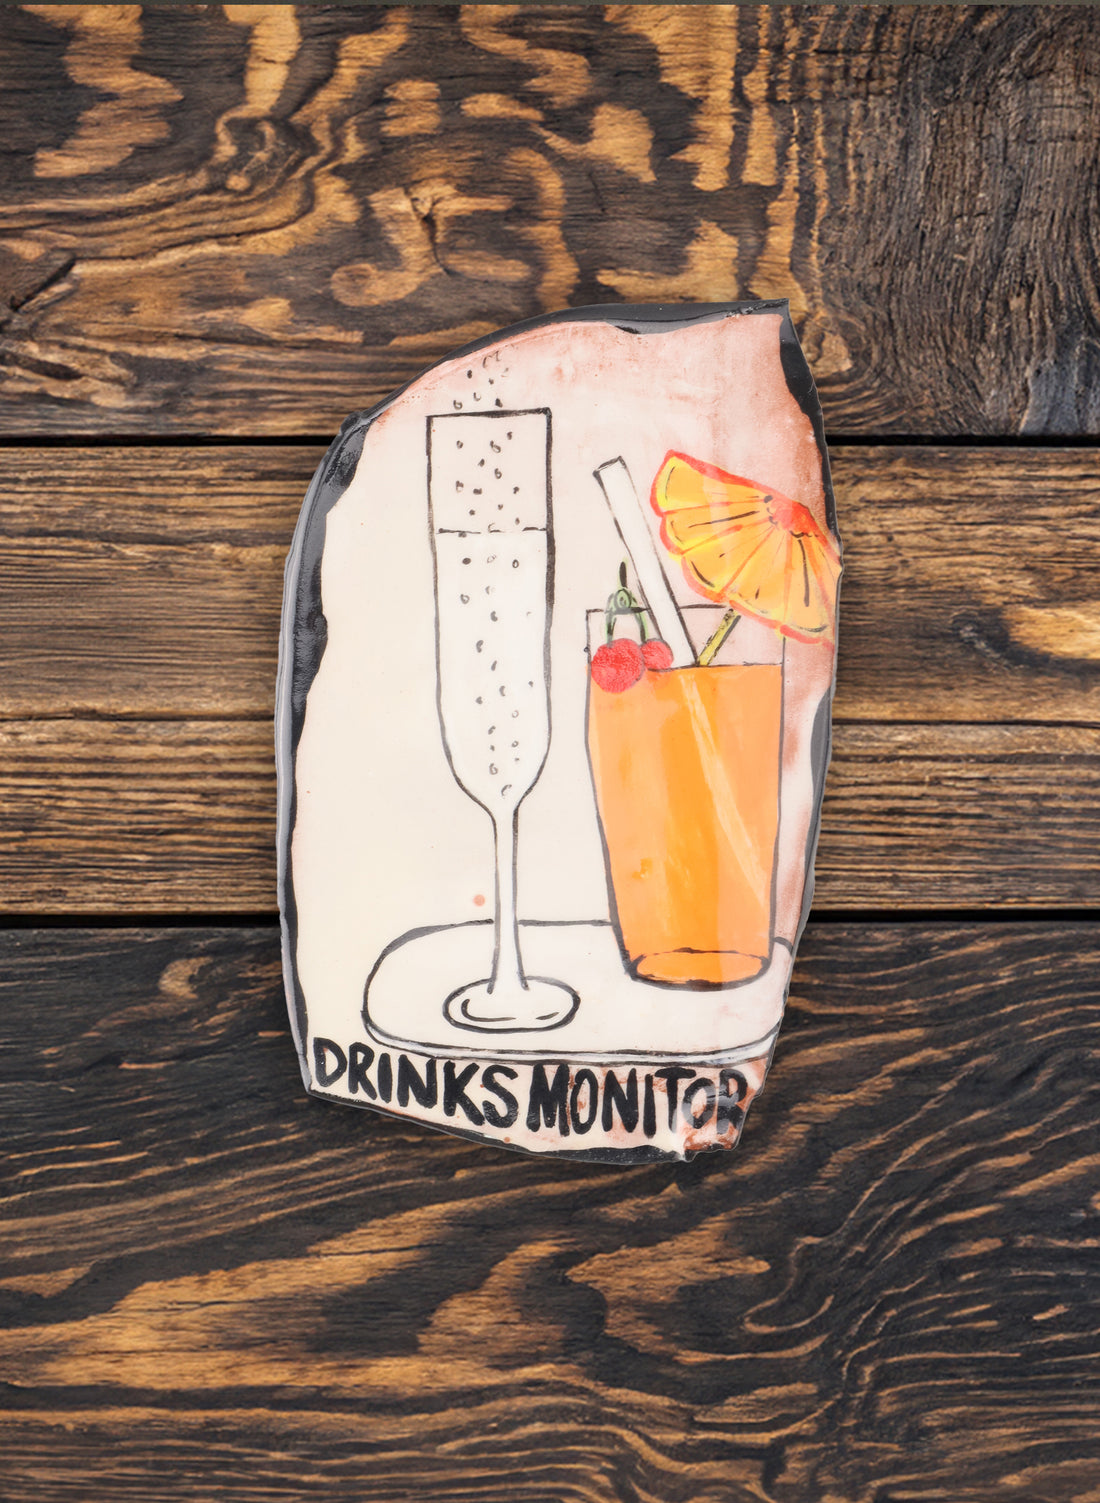 Wall Tile - Drinks Monitor